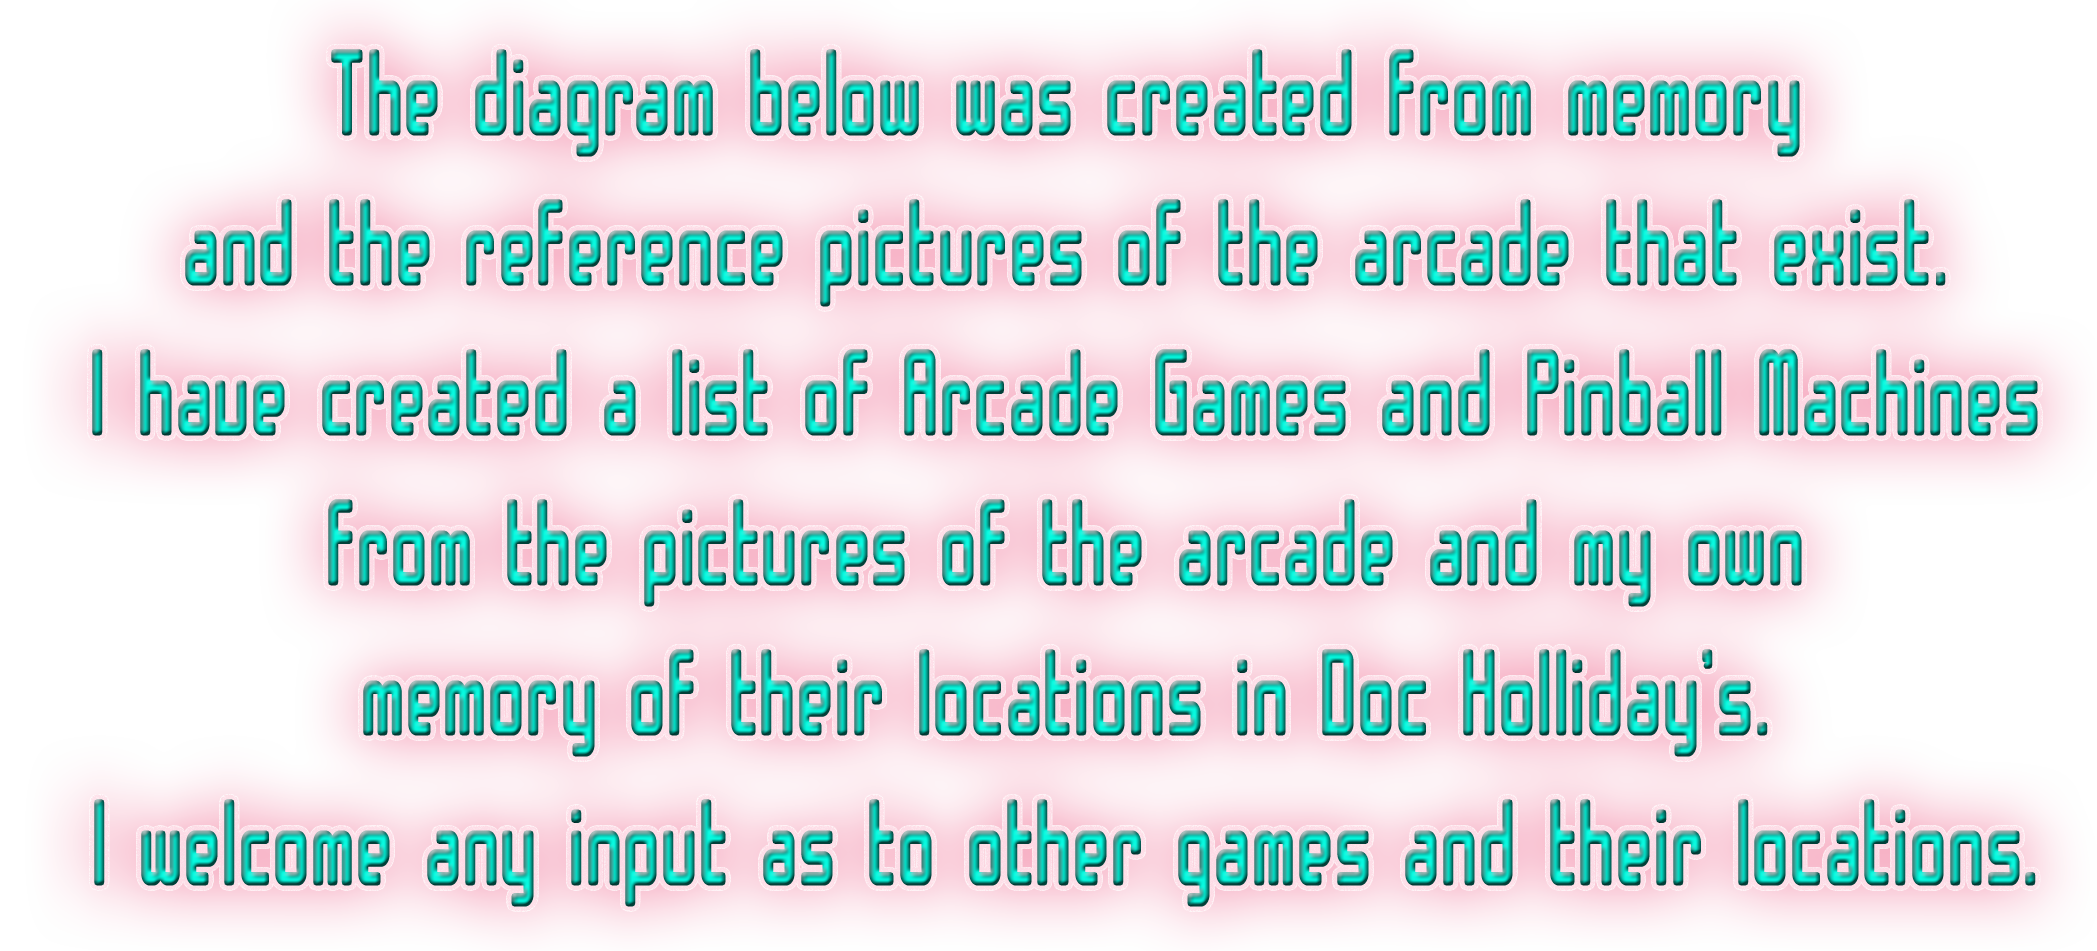 Doc Holliday's Game Emporium Arcade Diagram Narrative